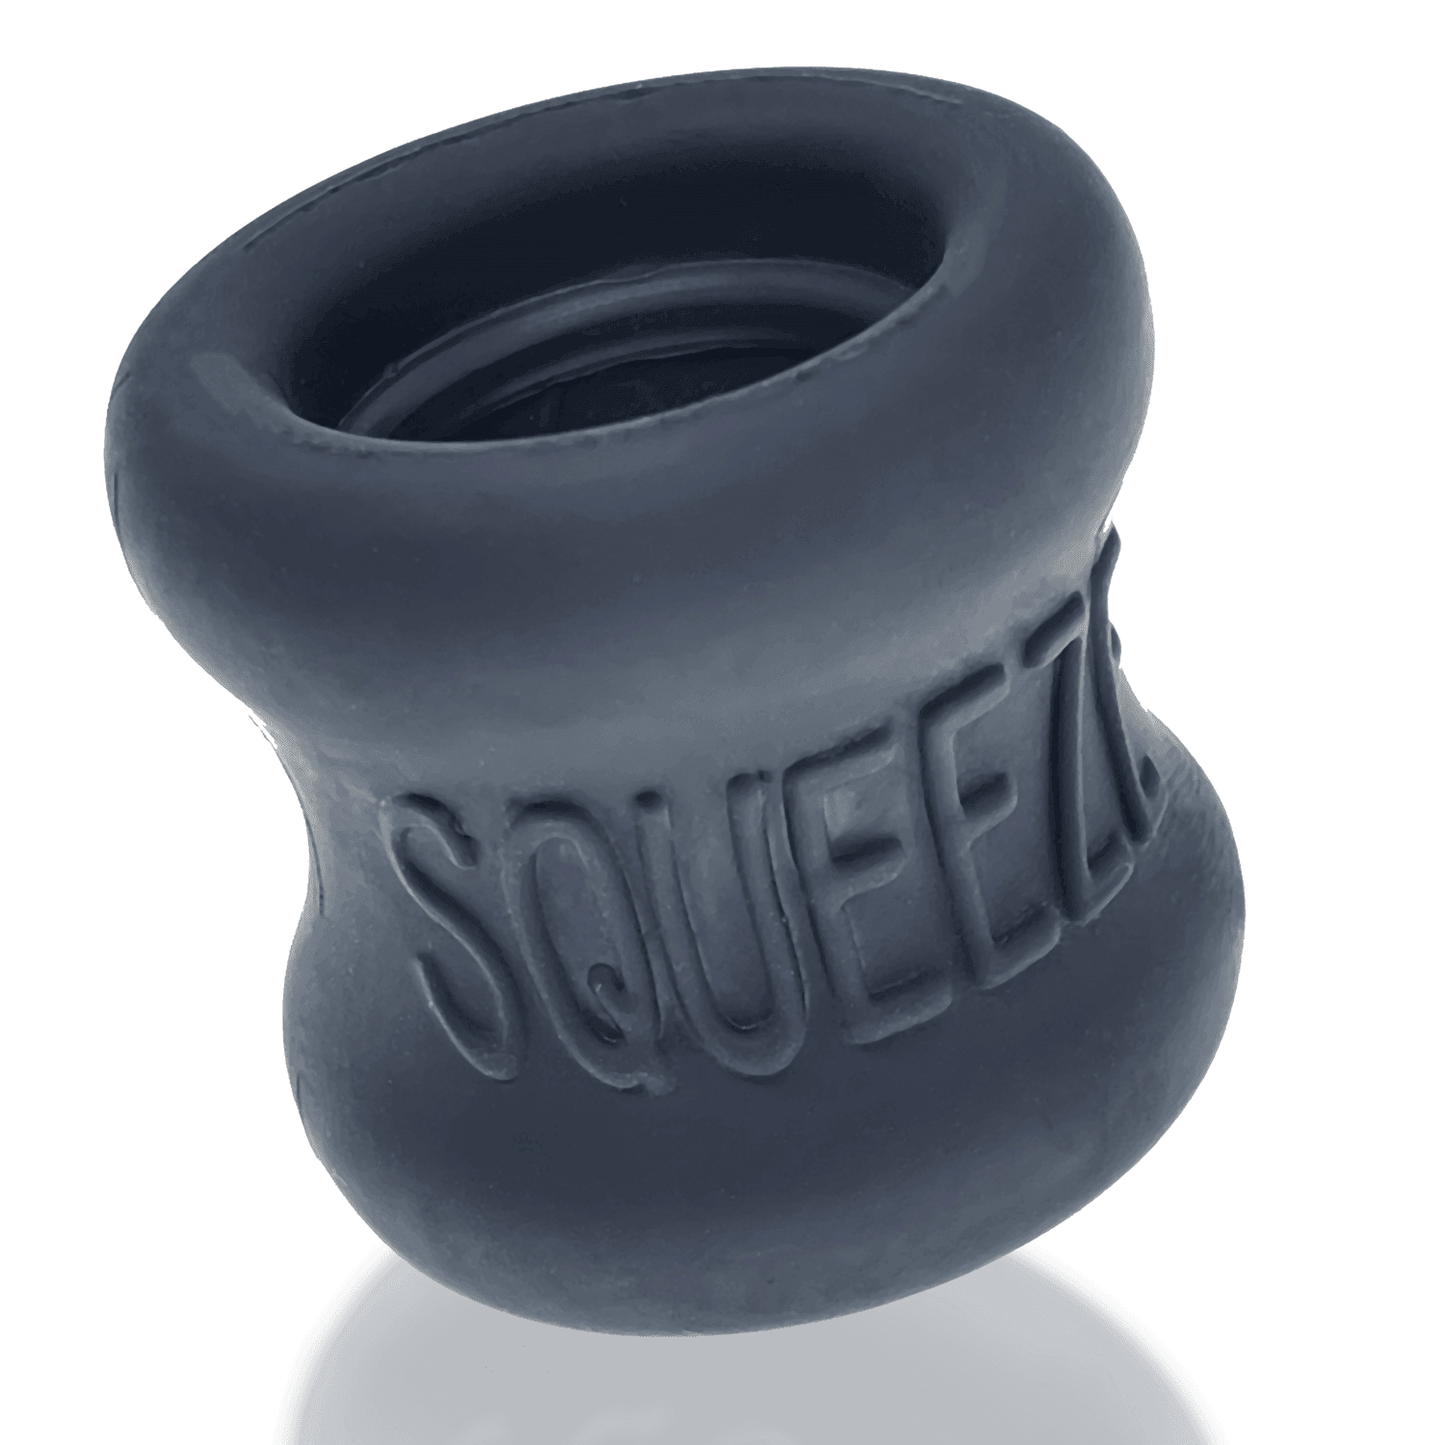 Squeeze Soft - Grip Ballstretcher - Night Black - My Sex Toy Hub